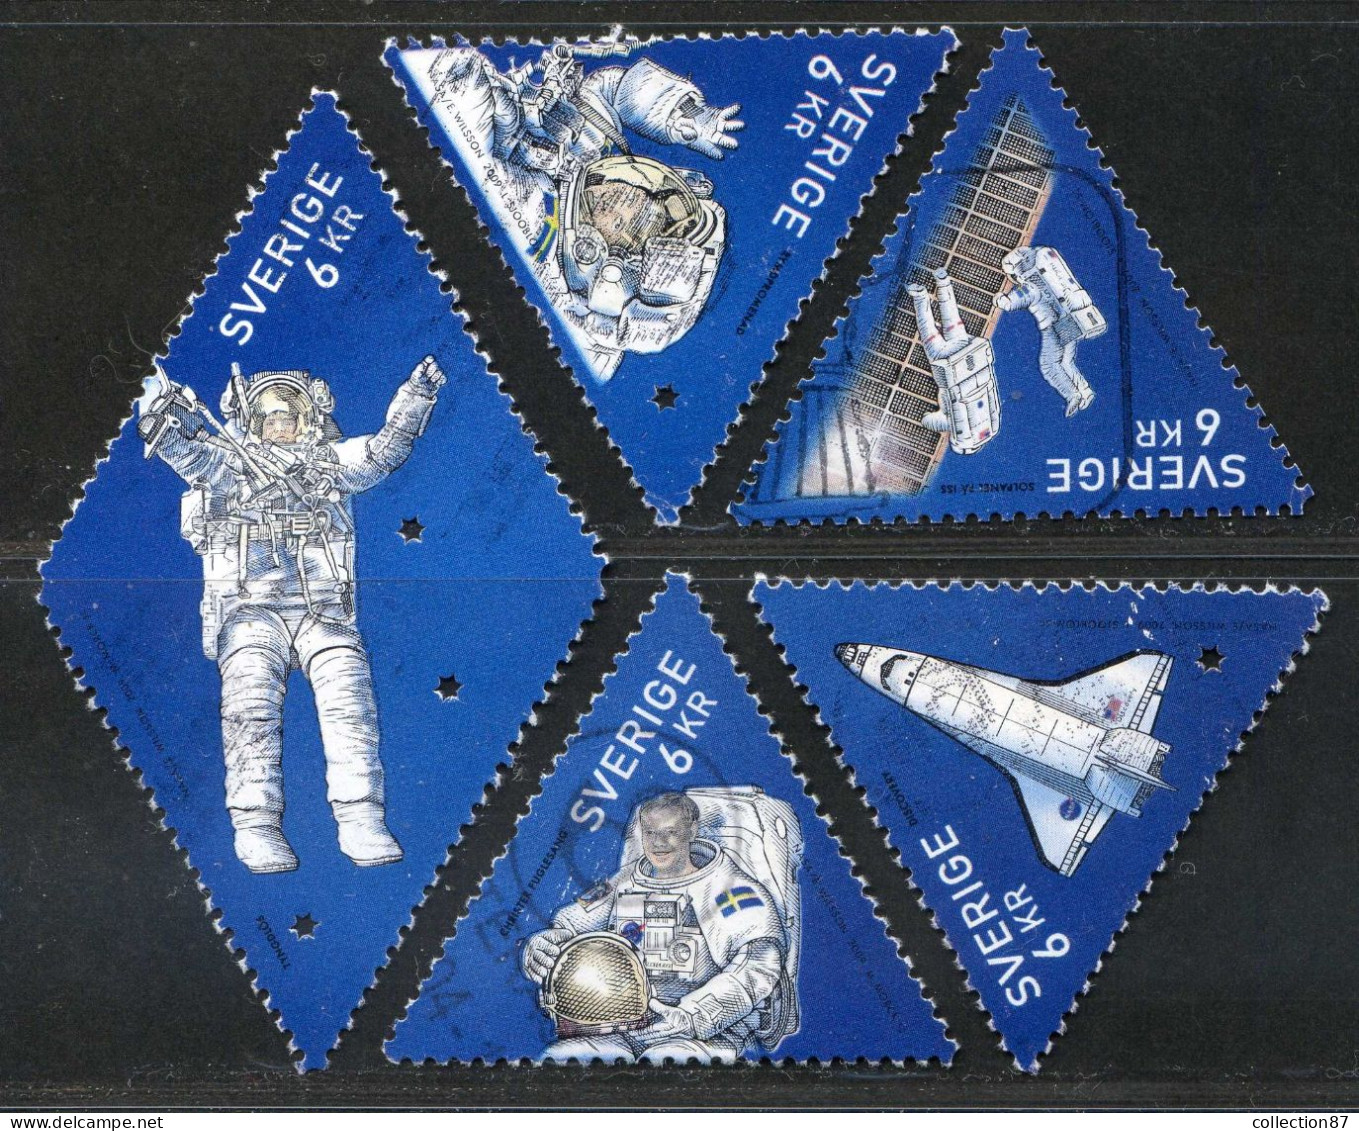 Réf 77 < SUEDE < Yvert N° 2696 à 2700 Ø < Année 2009 Used SWEDEN < Espace Christer Fuglesang Premier Astronaute Suédois - Gebraucht